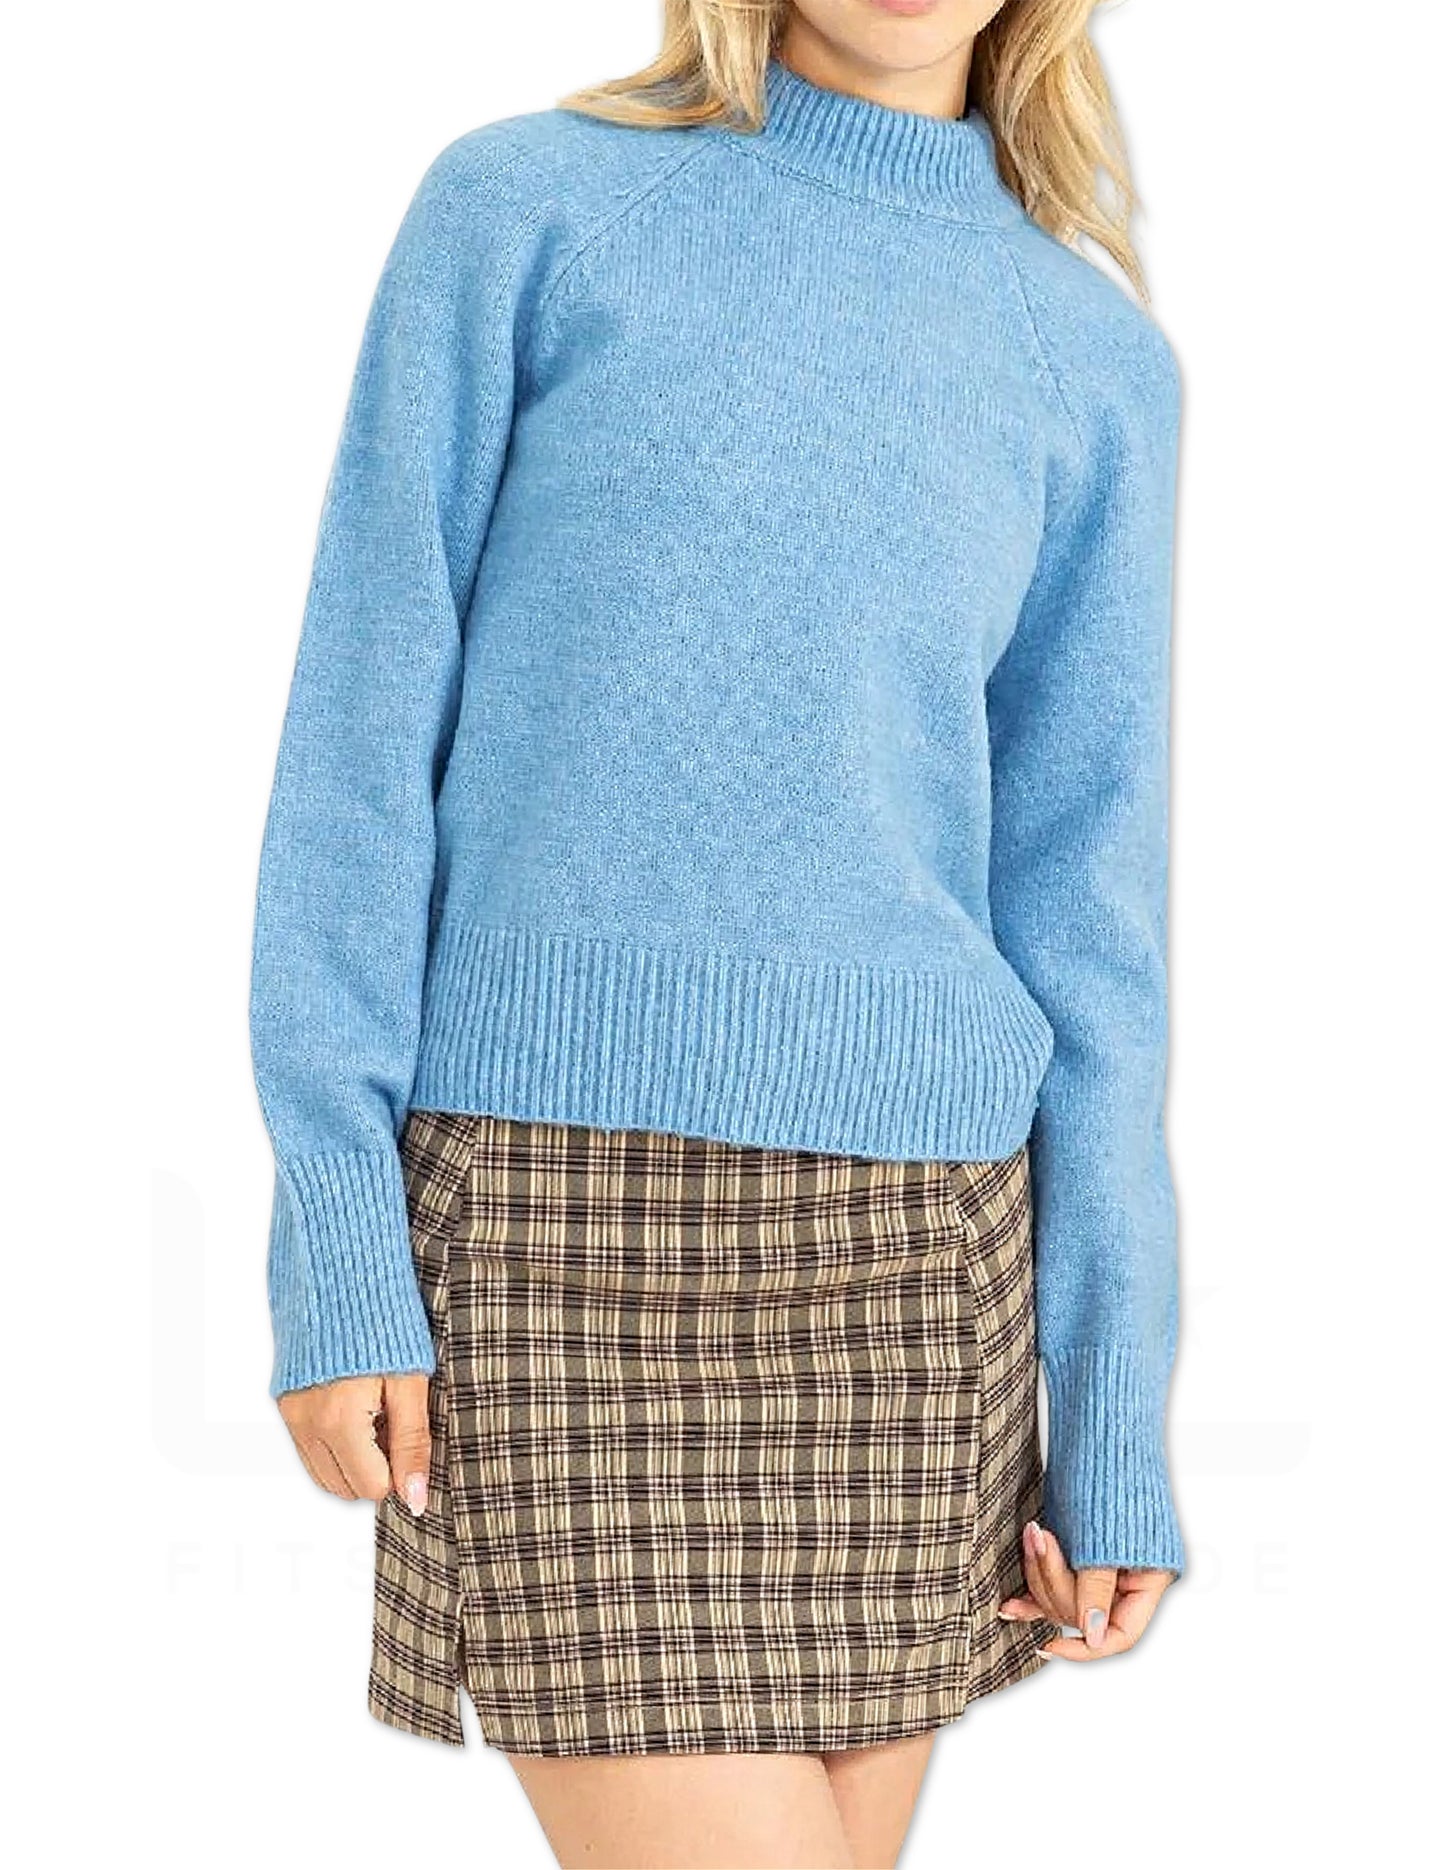 High Neck Raglan Sleeve Sweater - Blue